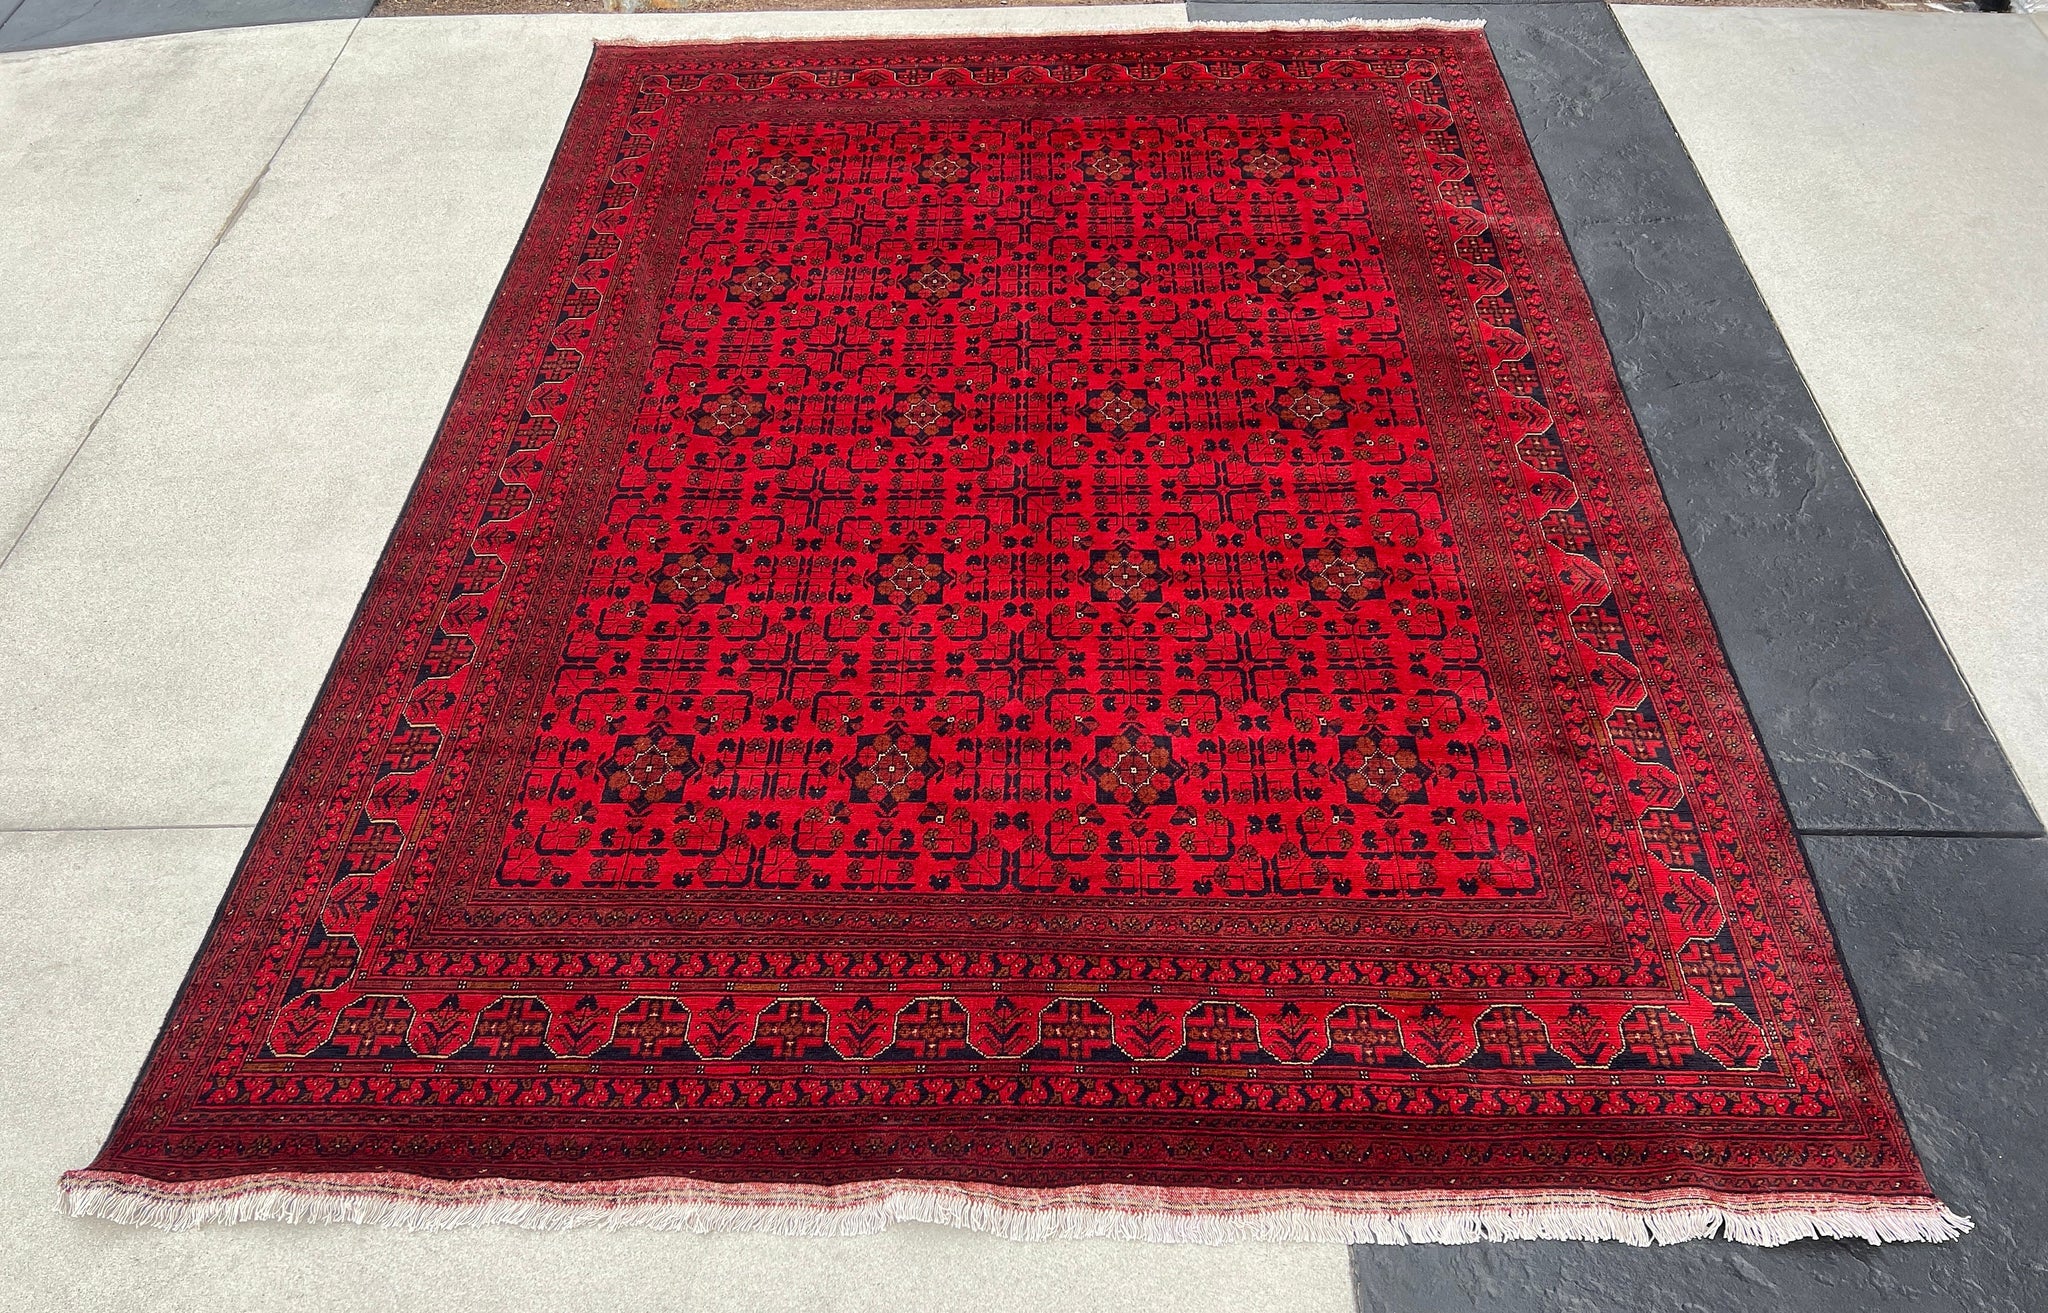 9x12 (270x365) Handmade Afghan Rug | Cherry Red Brick Red Black Burnt Orange Brown | Hand Knotted Oriental Turkish Wool Persian Floral Boho